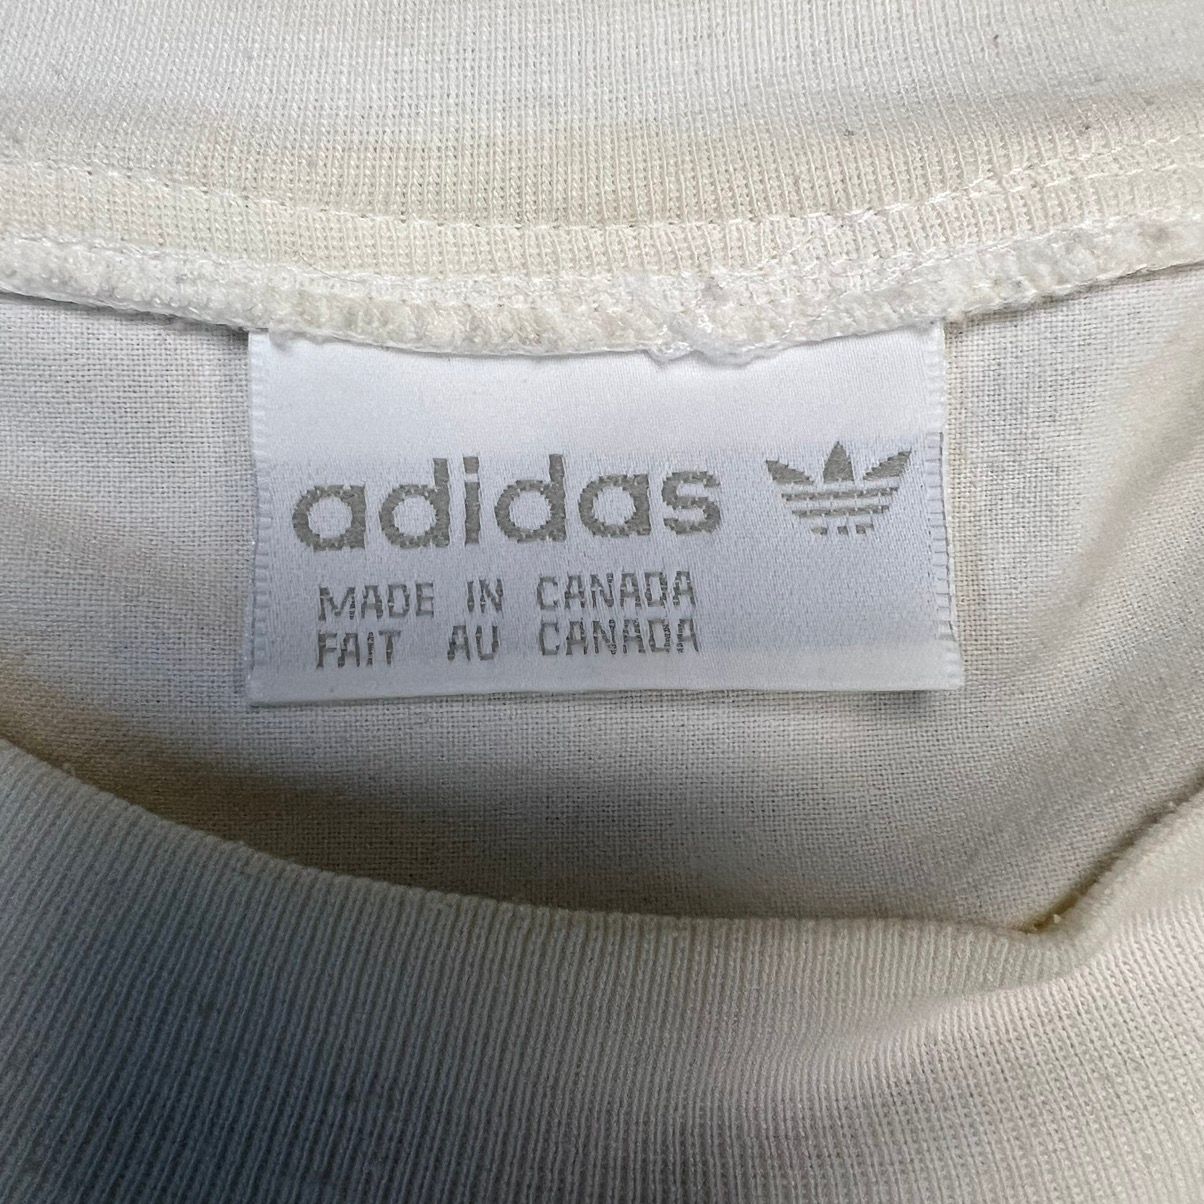 Adidas VTG 1992 Adidas Barcelona Olympics Team Canada Sweatshirt Size US XL / EU 56 / 4 - 10 Preview